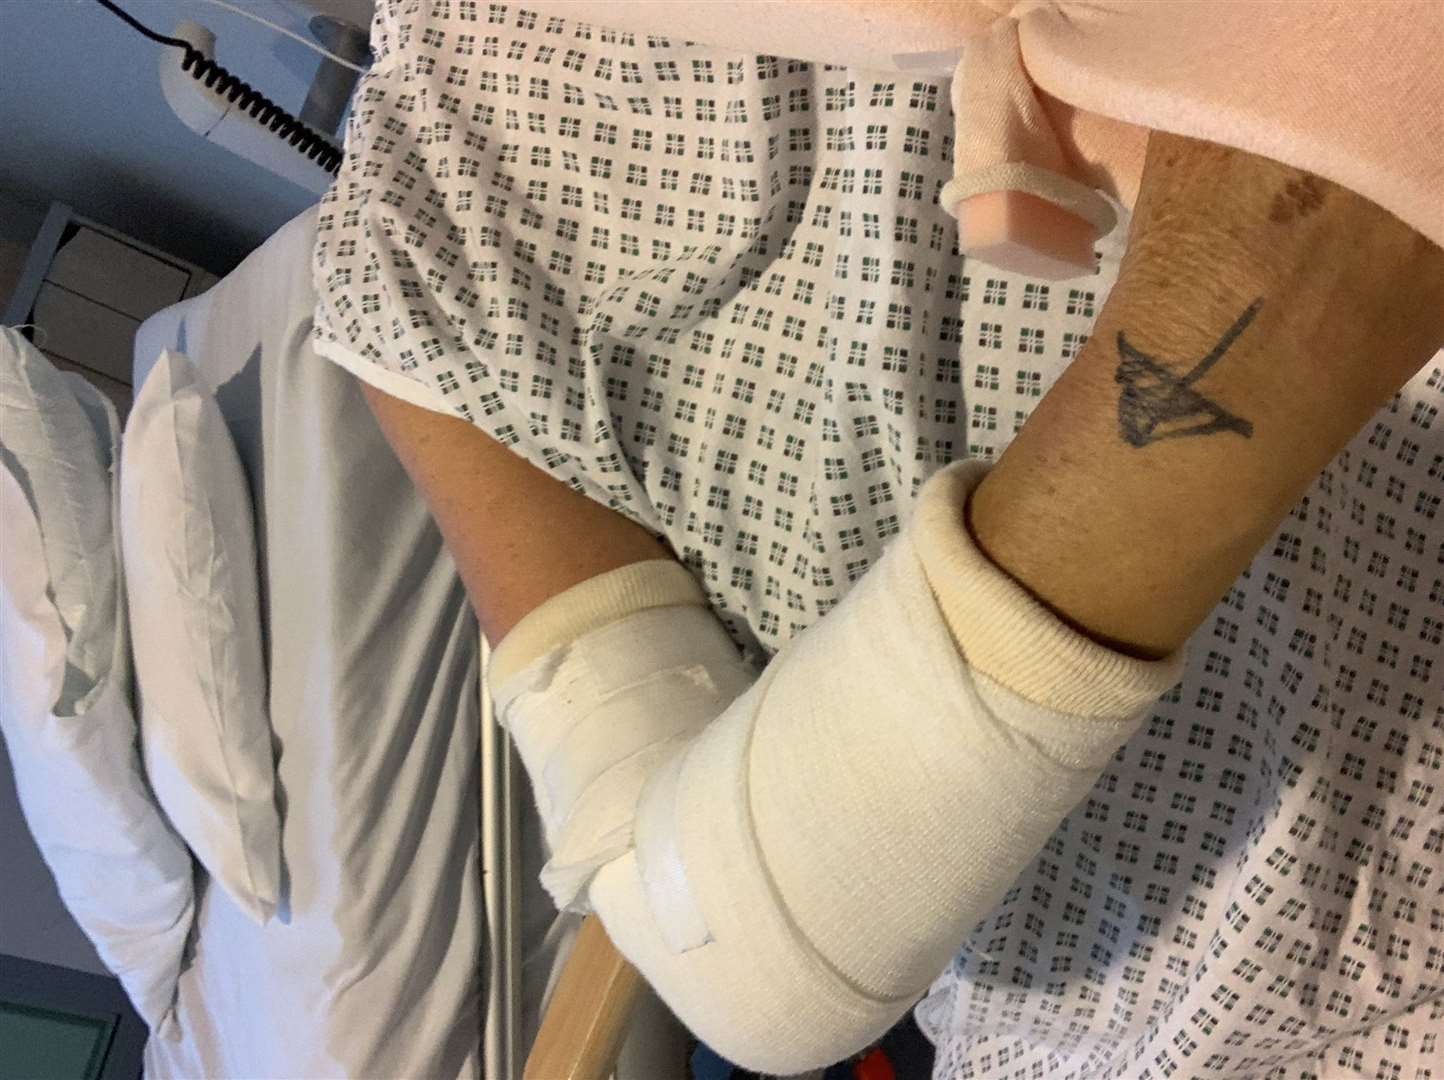 Mrs Harper broke her elbow when she fell over last October. Picture: Suzanne Harper